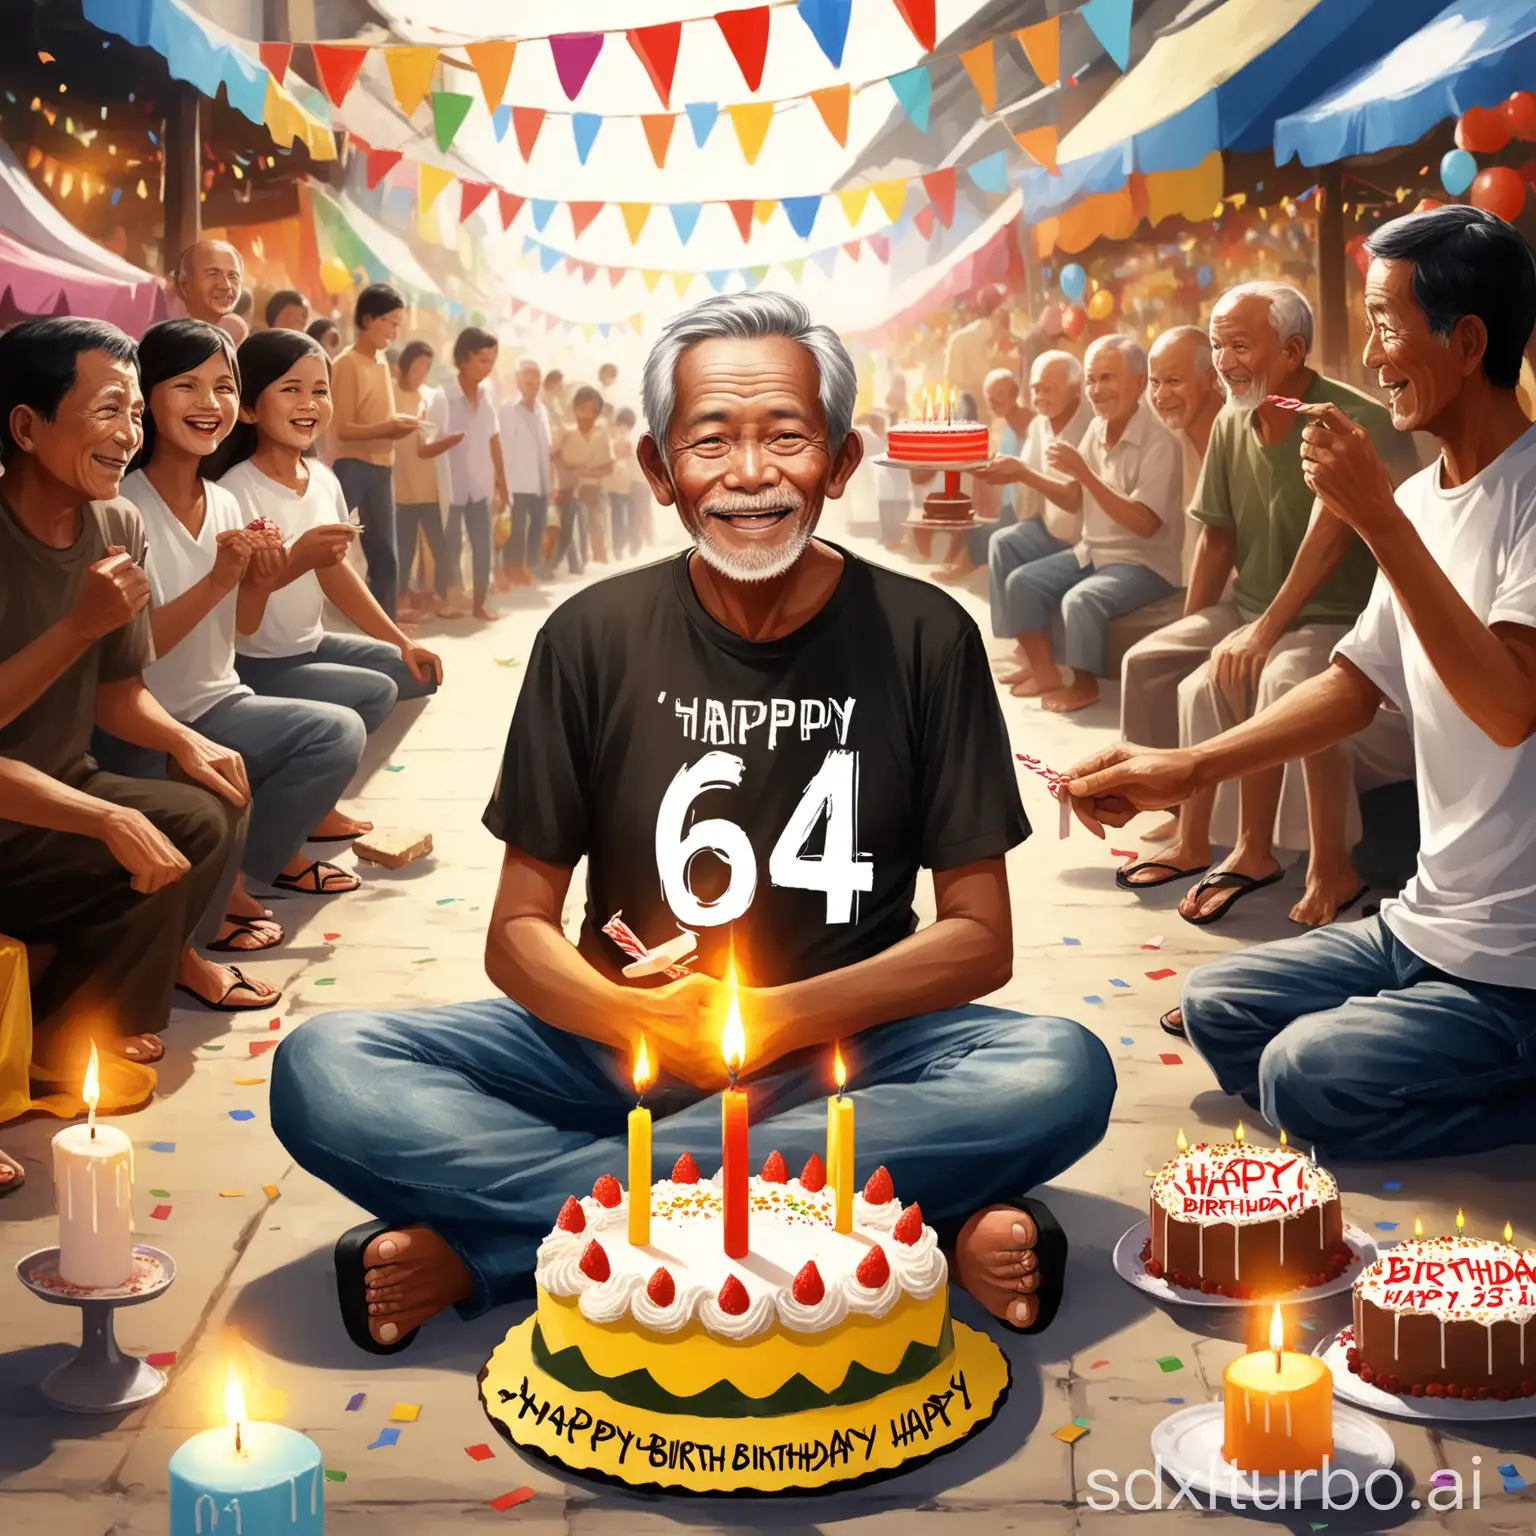 Jubilant-64YearOld-Celebrates-Birthday-with-Market-Revelry